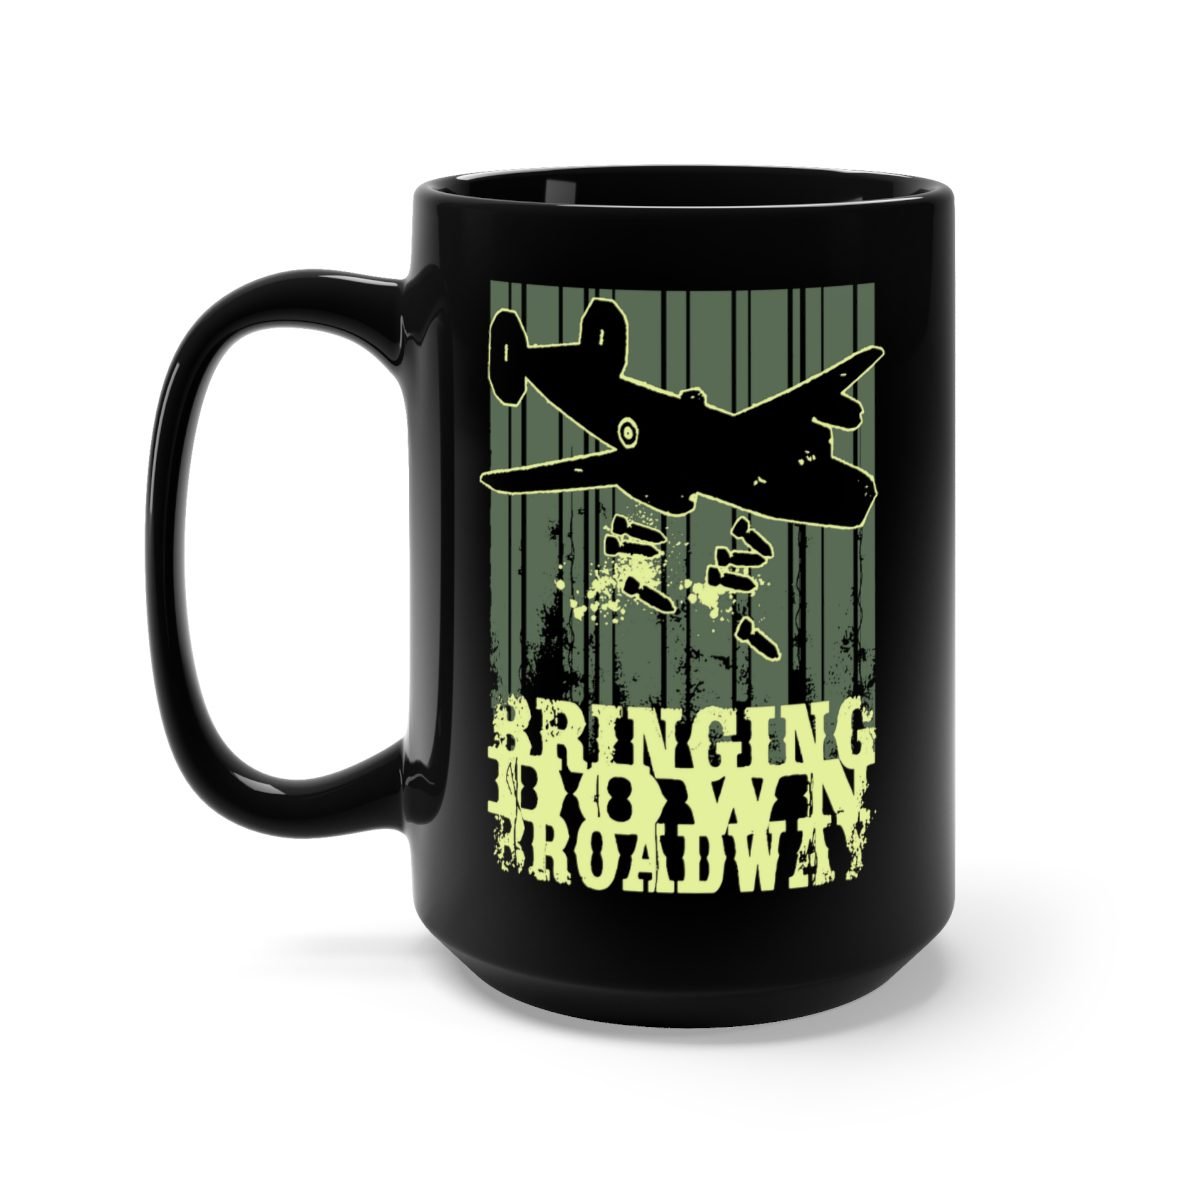 Bringing Down Broadway – Bomber 15oz Black Mug